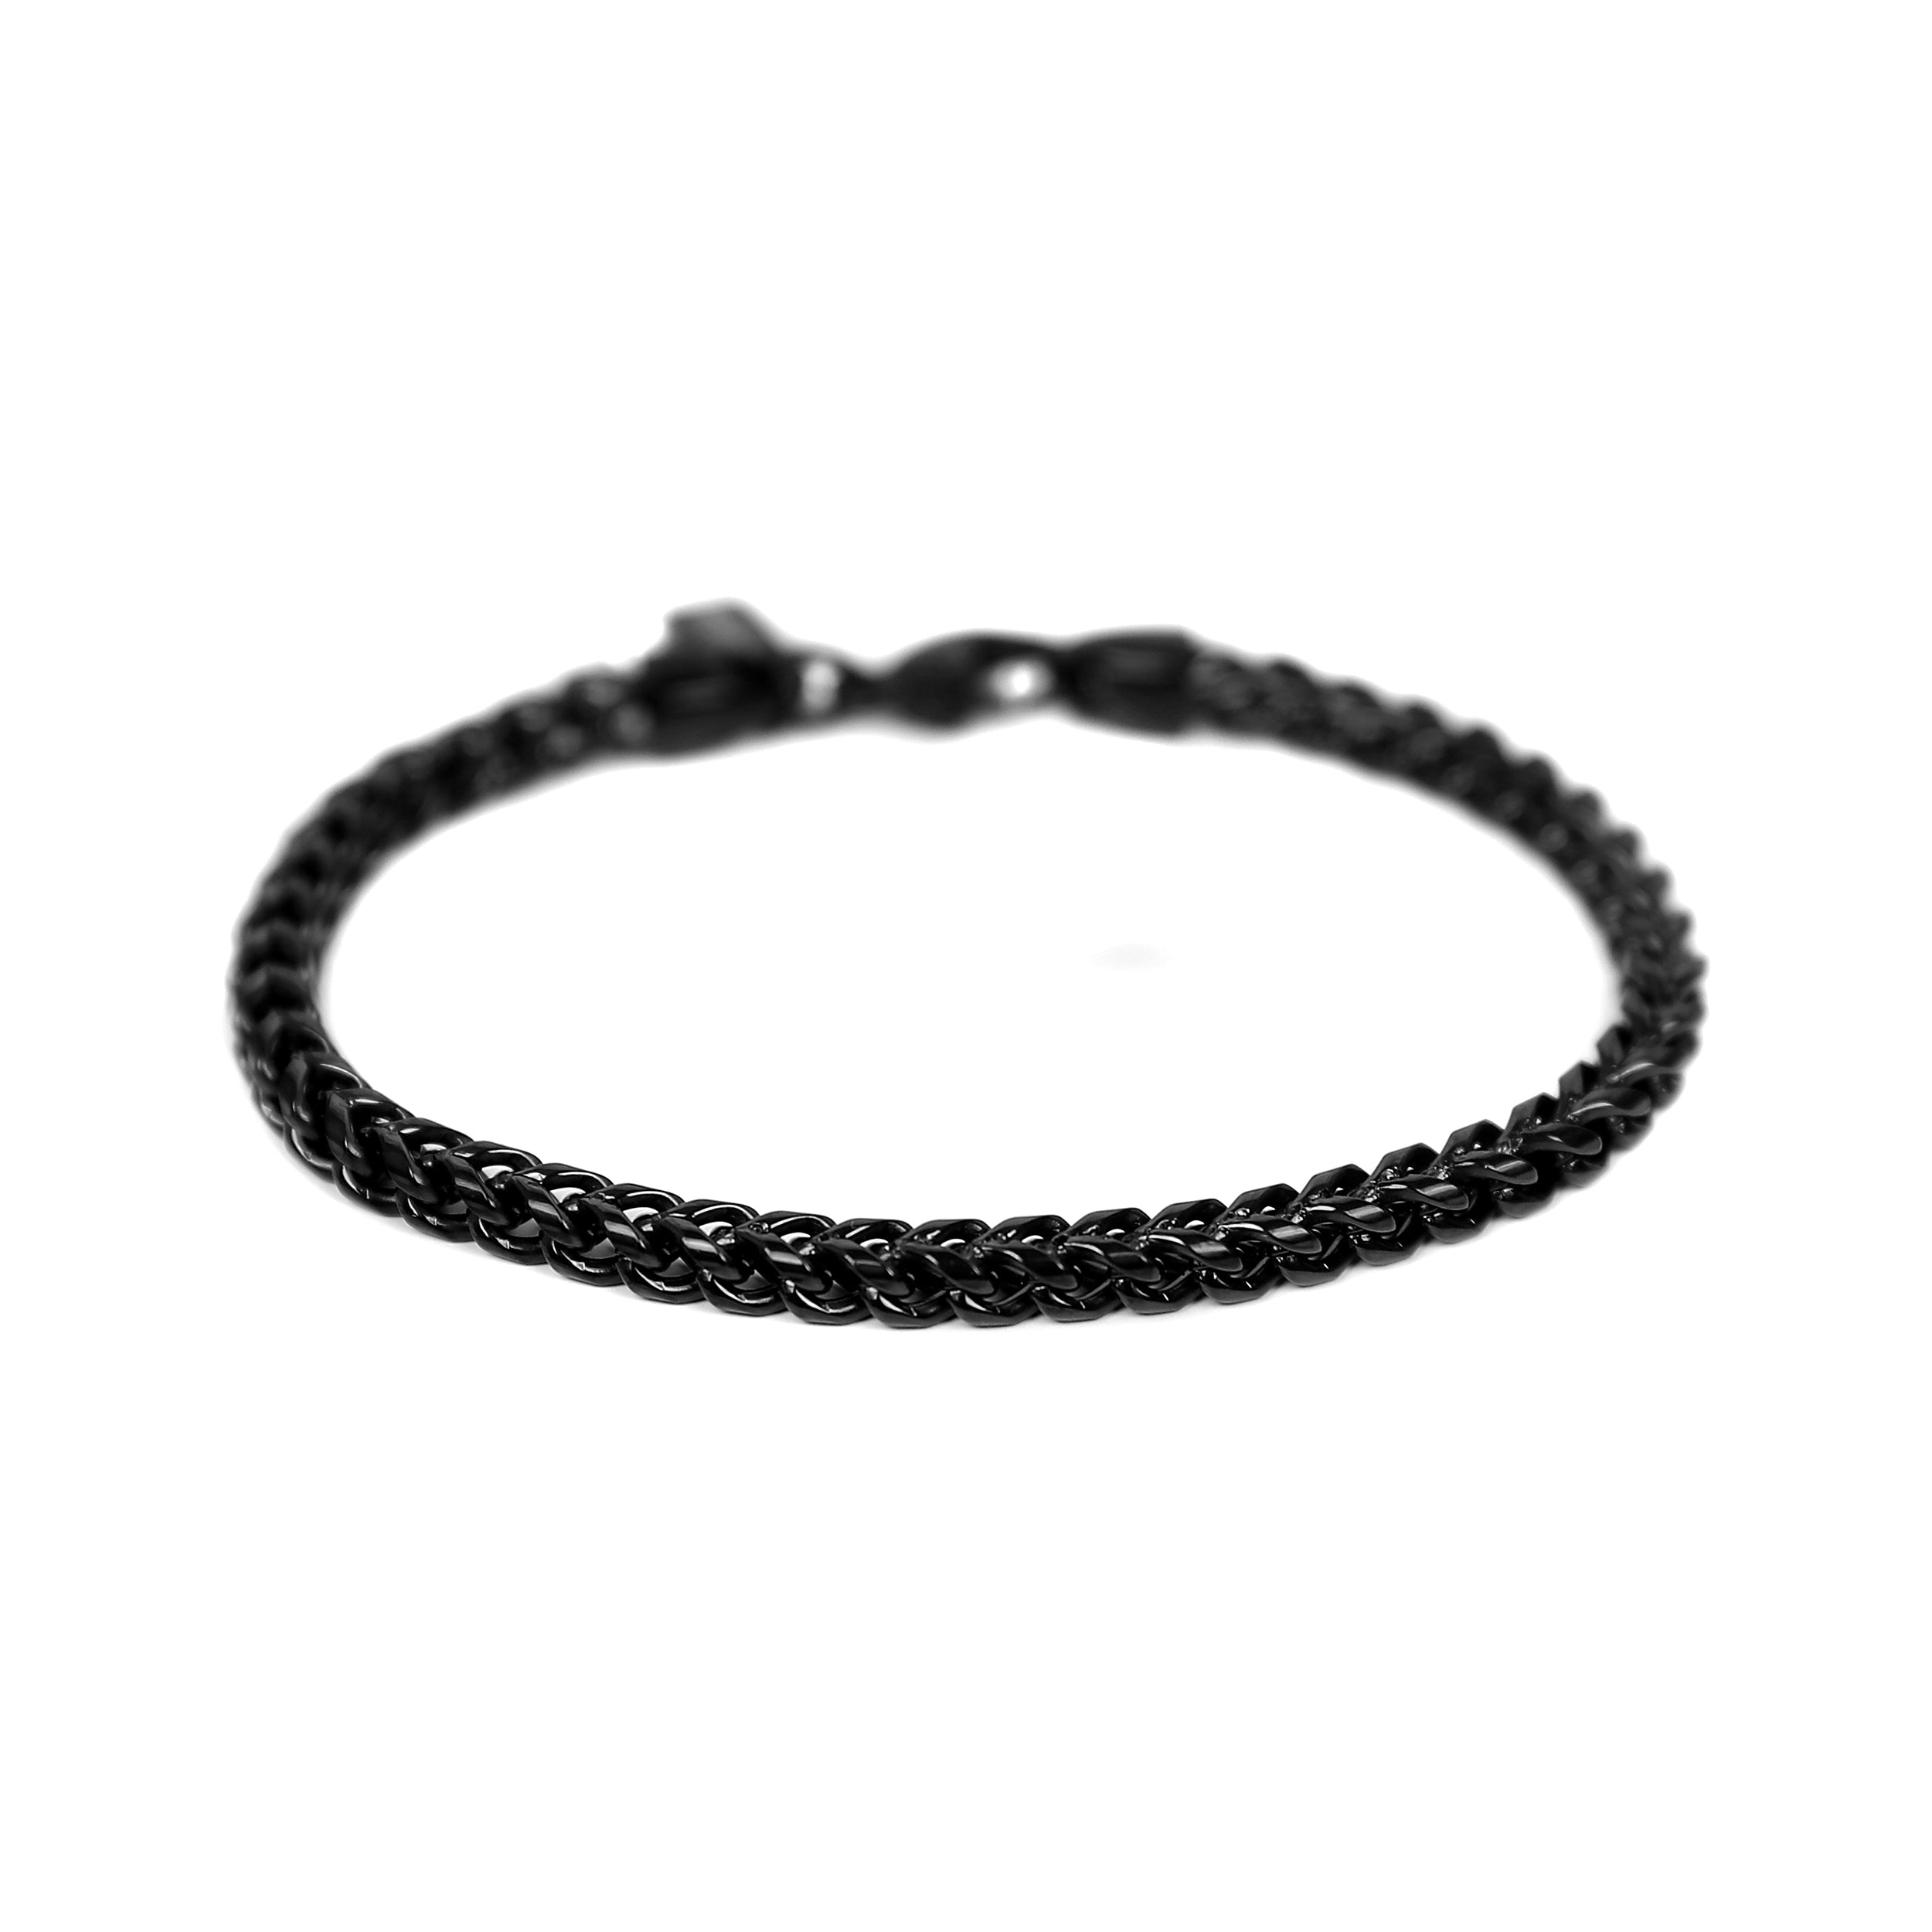 Franco Chain Bracelet - Black 5mm